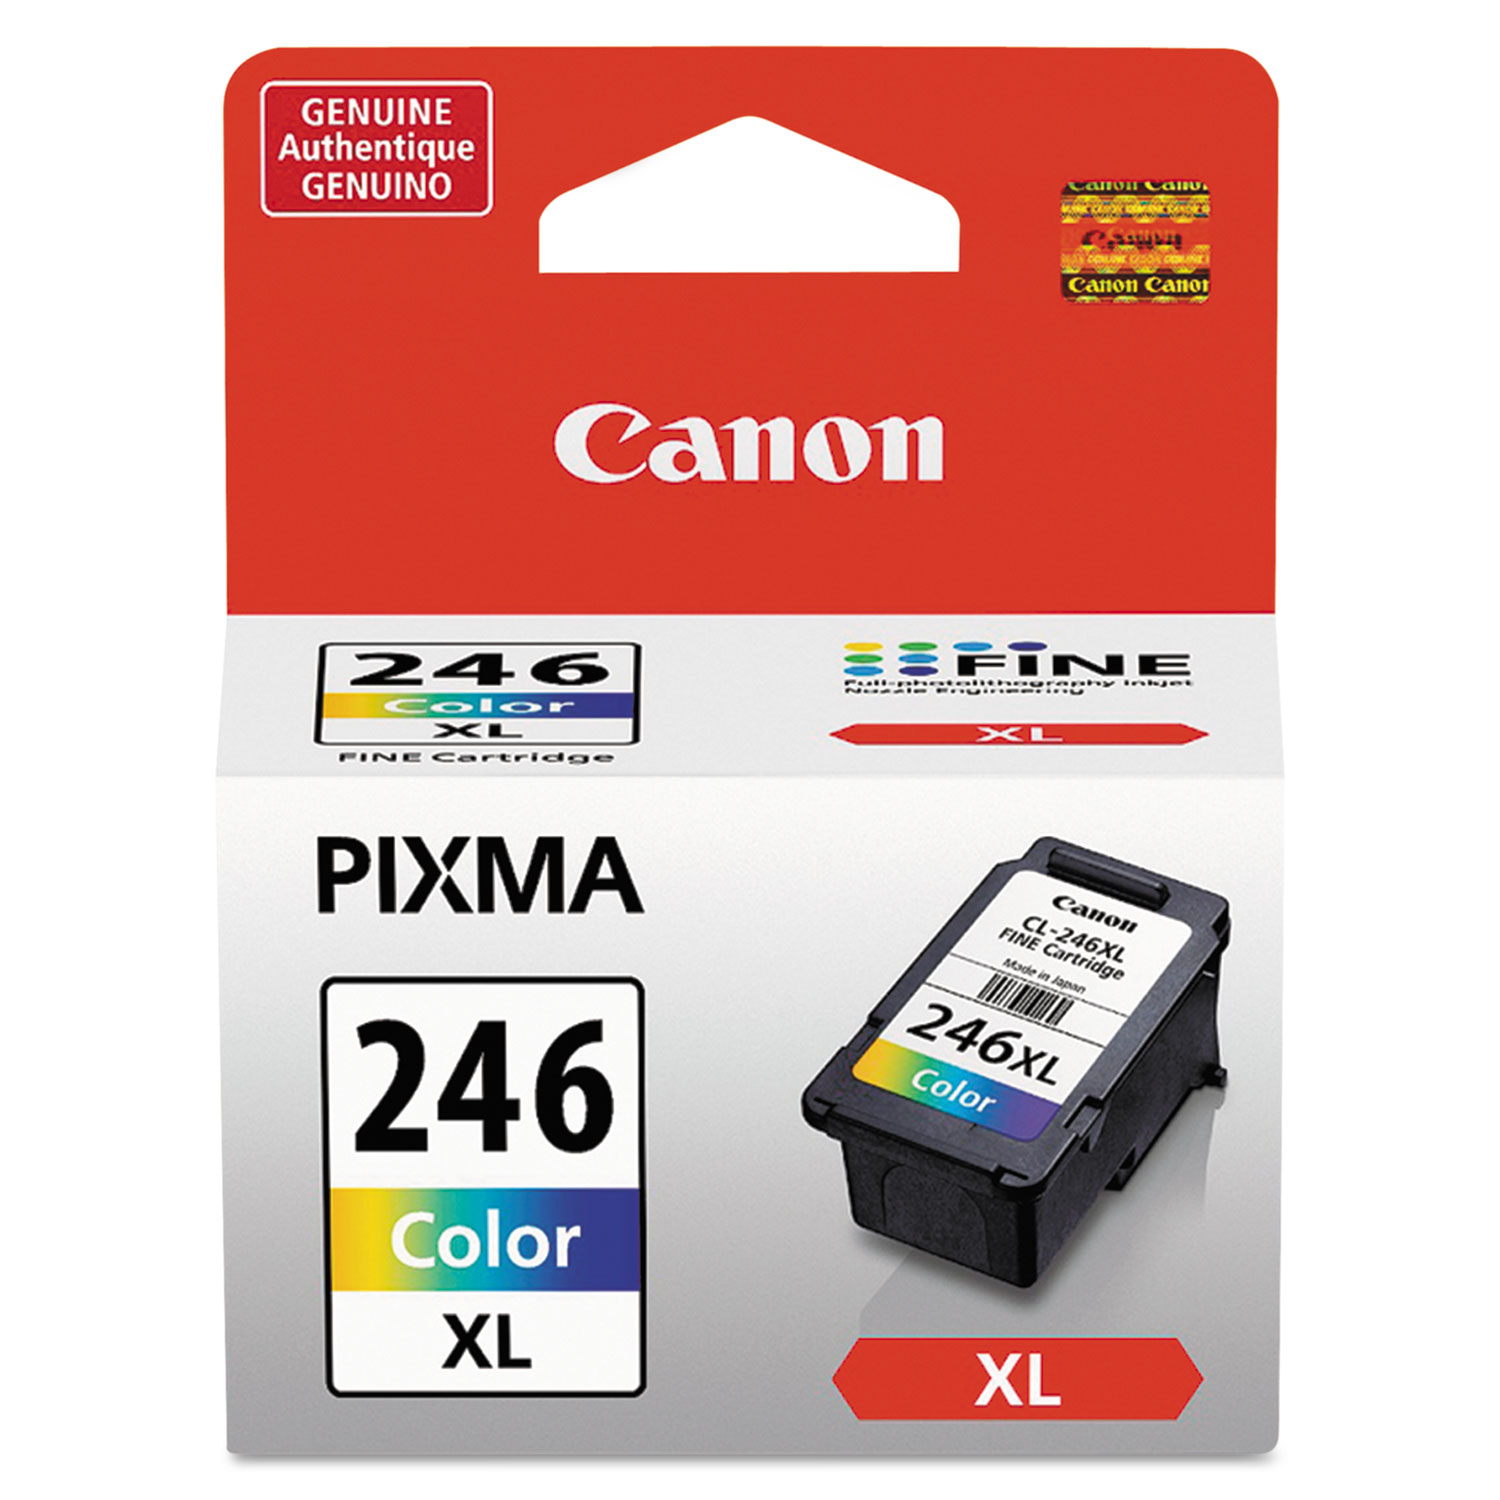  Canon 8280B001 8280B001 (CL-246XL) ChromaLife100+ High-Yield Ink, 300 Page-Yield, Tri-Color (CNM8280B001) 